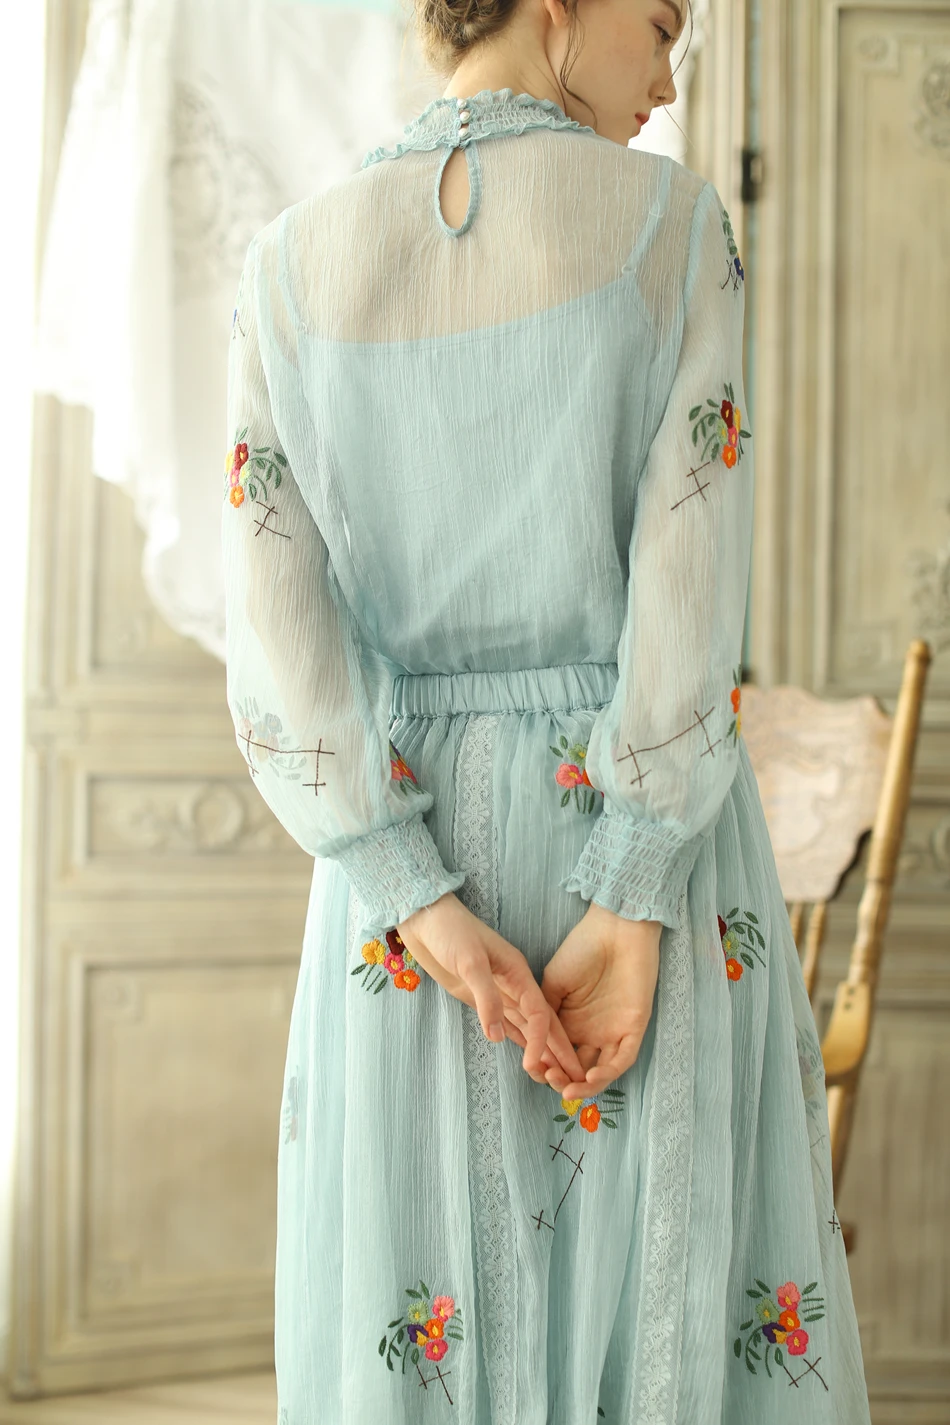 Линетт's chinoisery весна осень для женщин Винтаж Вышивка Мори девушки Кружева Лоскутная блуза рубашка